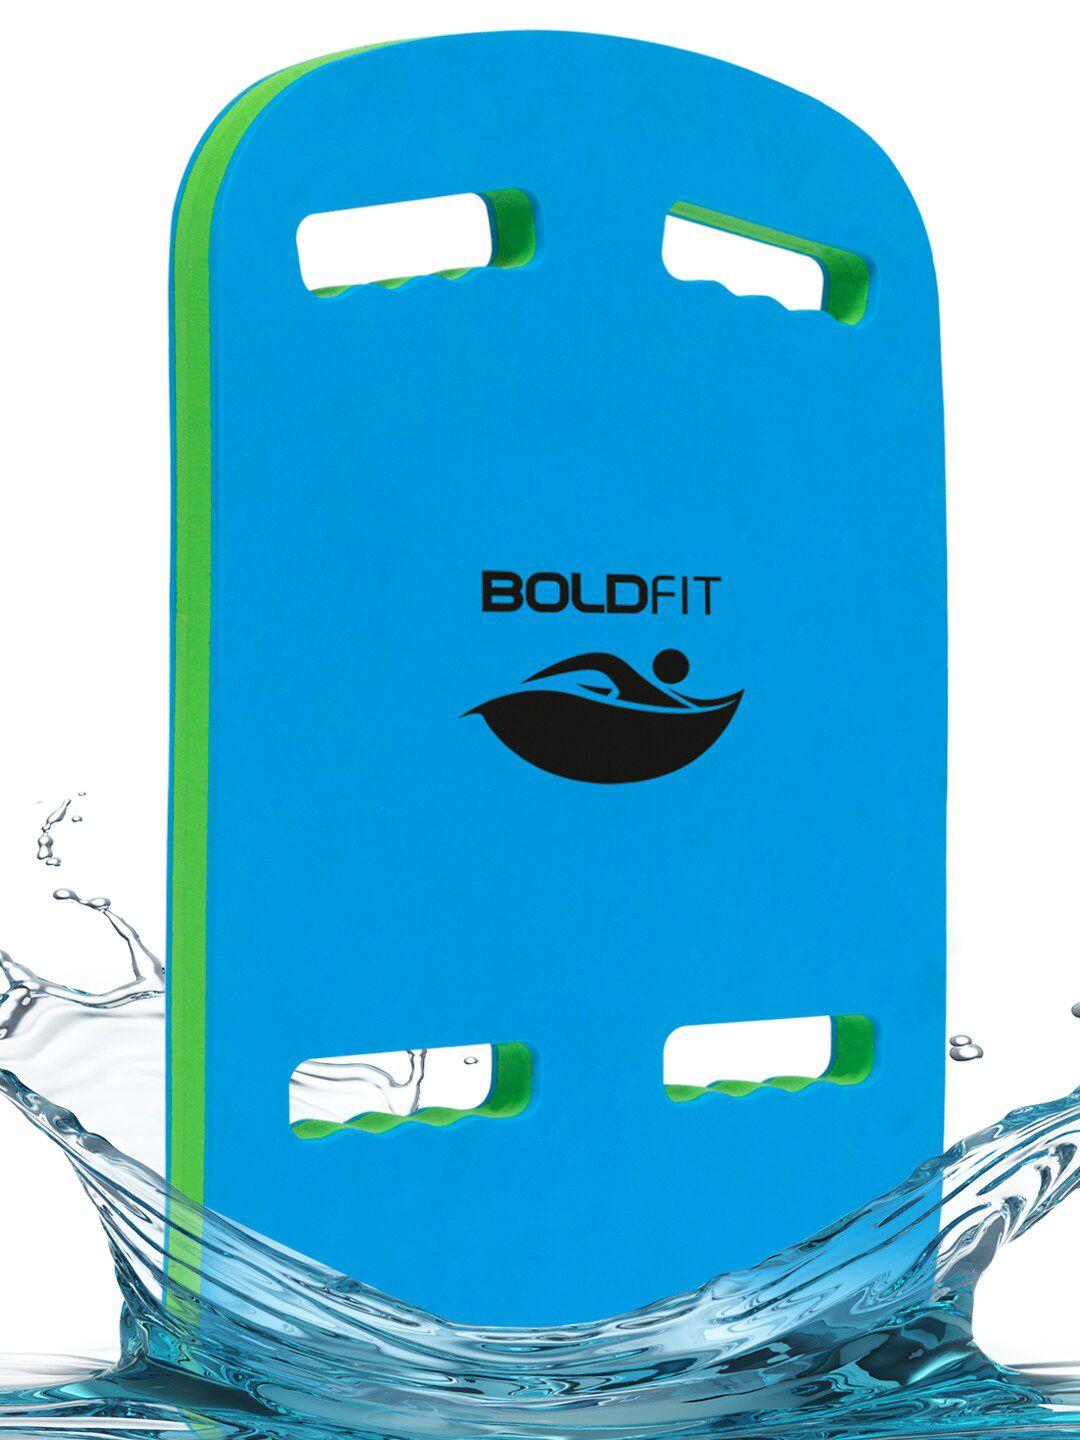 boldfit durable float pad kick board